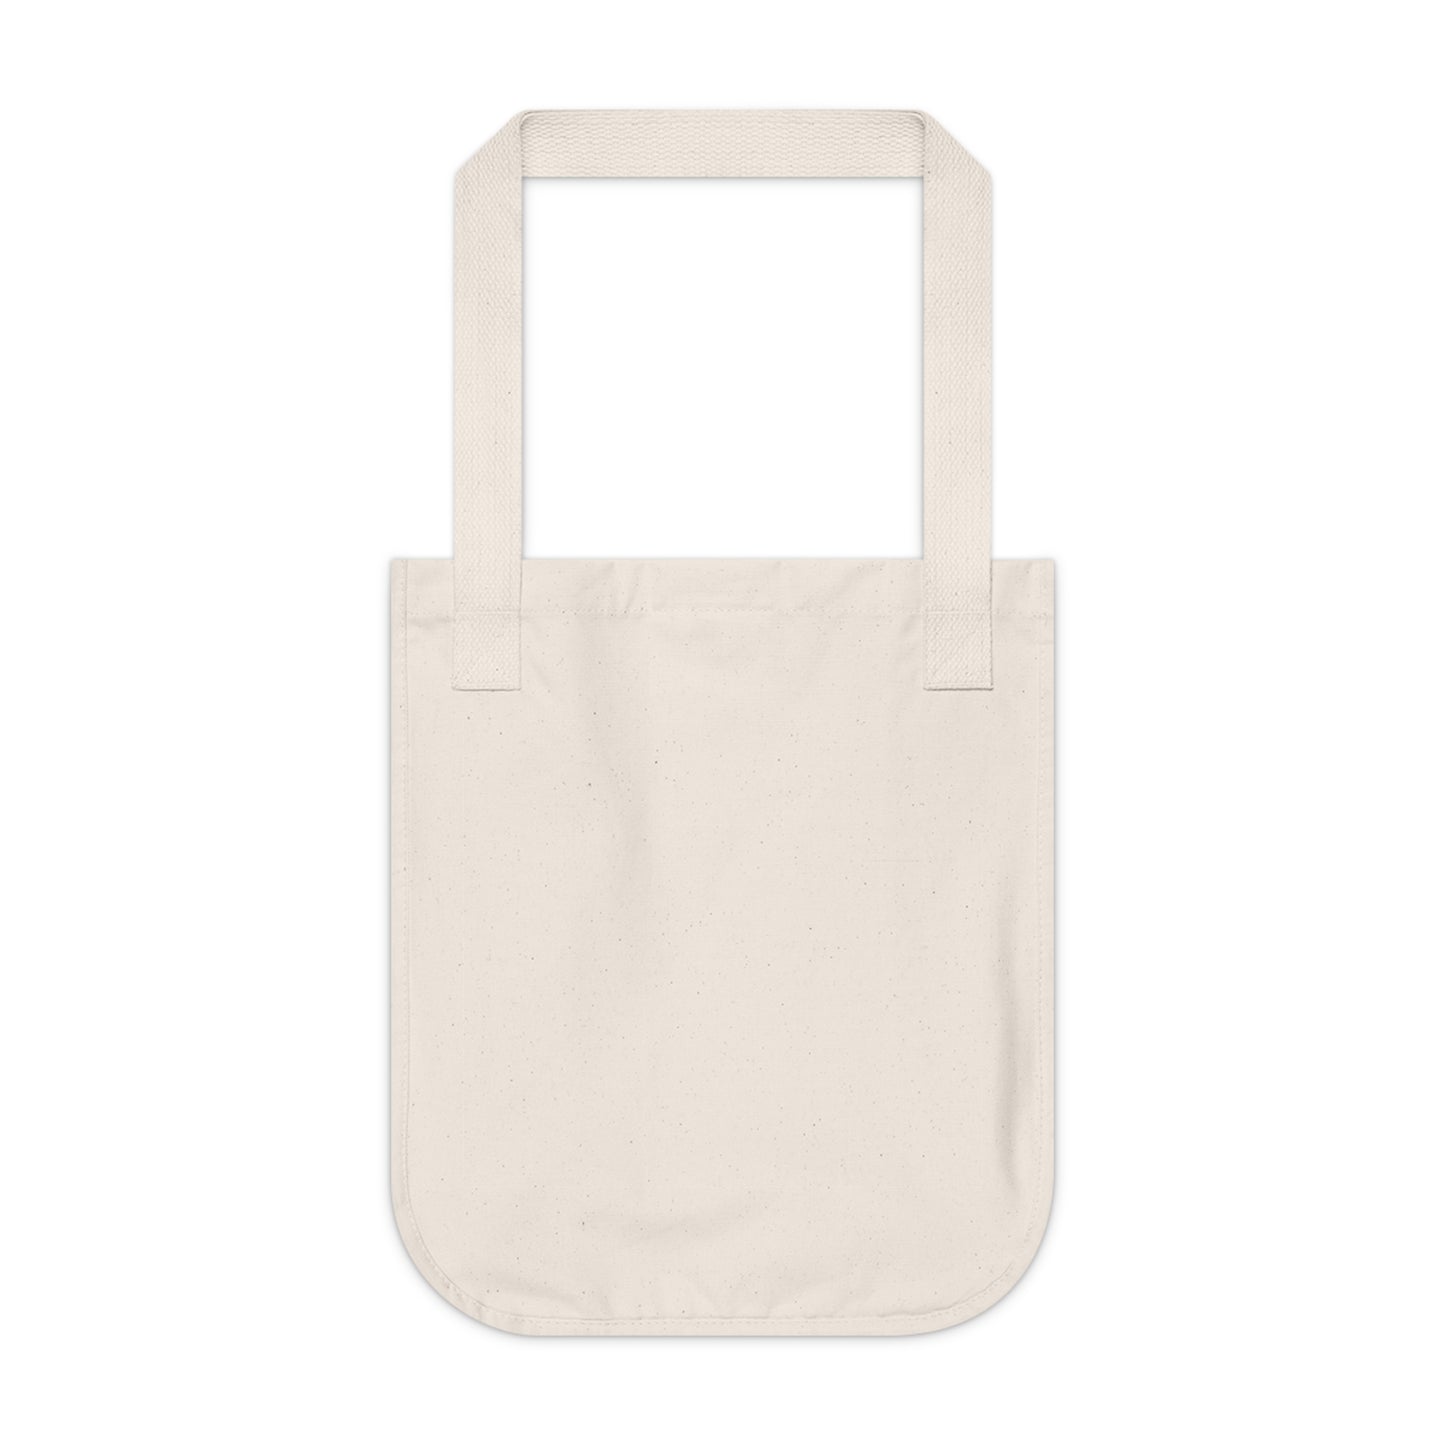 Use Social Plastic Tote Bag